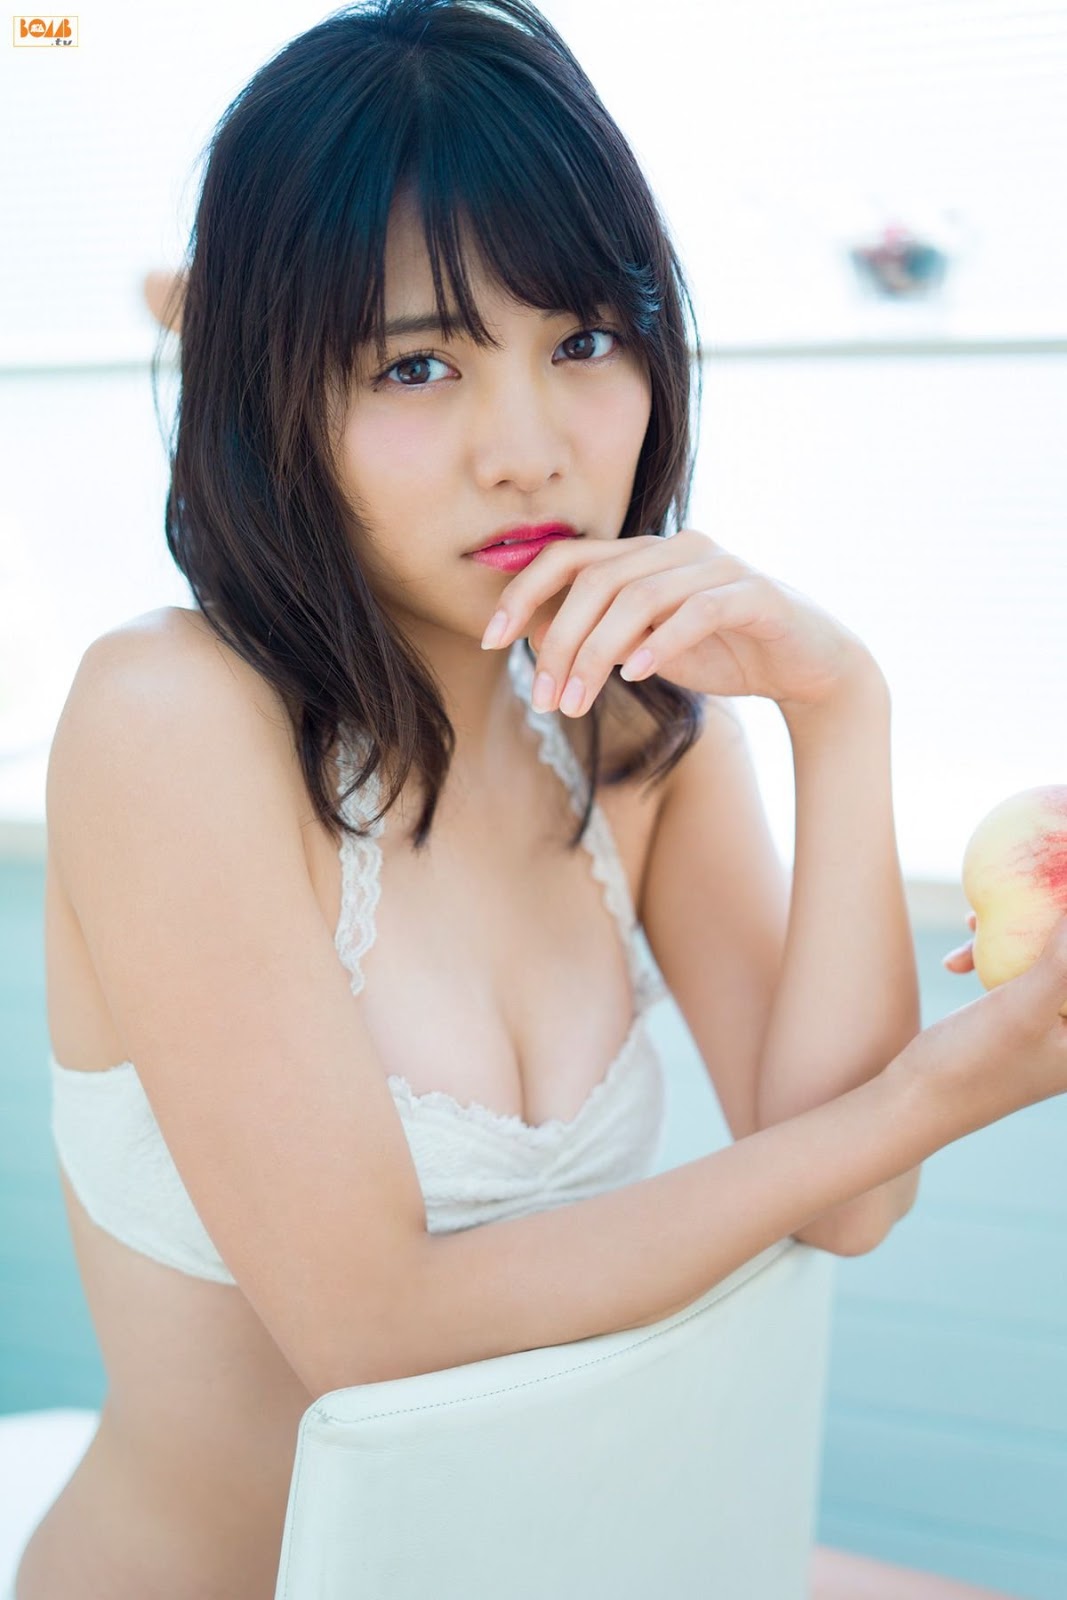 Image Japanese Model - Arisa Matsunaga - GRAVURE Channel Photo Jacket - TruePic.net - Picture-61